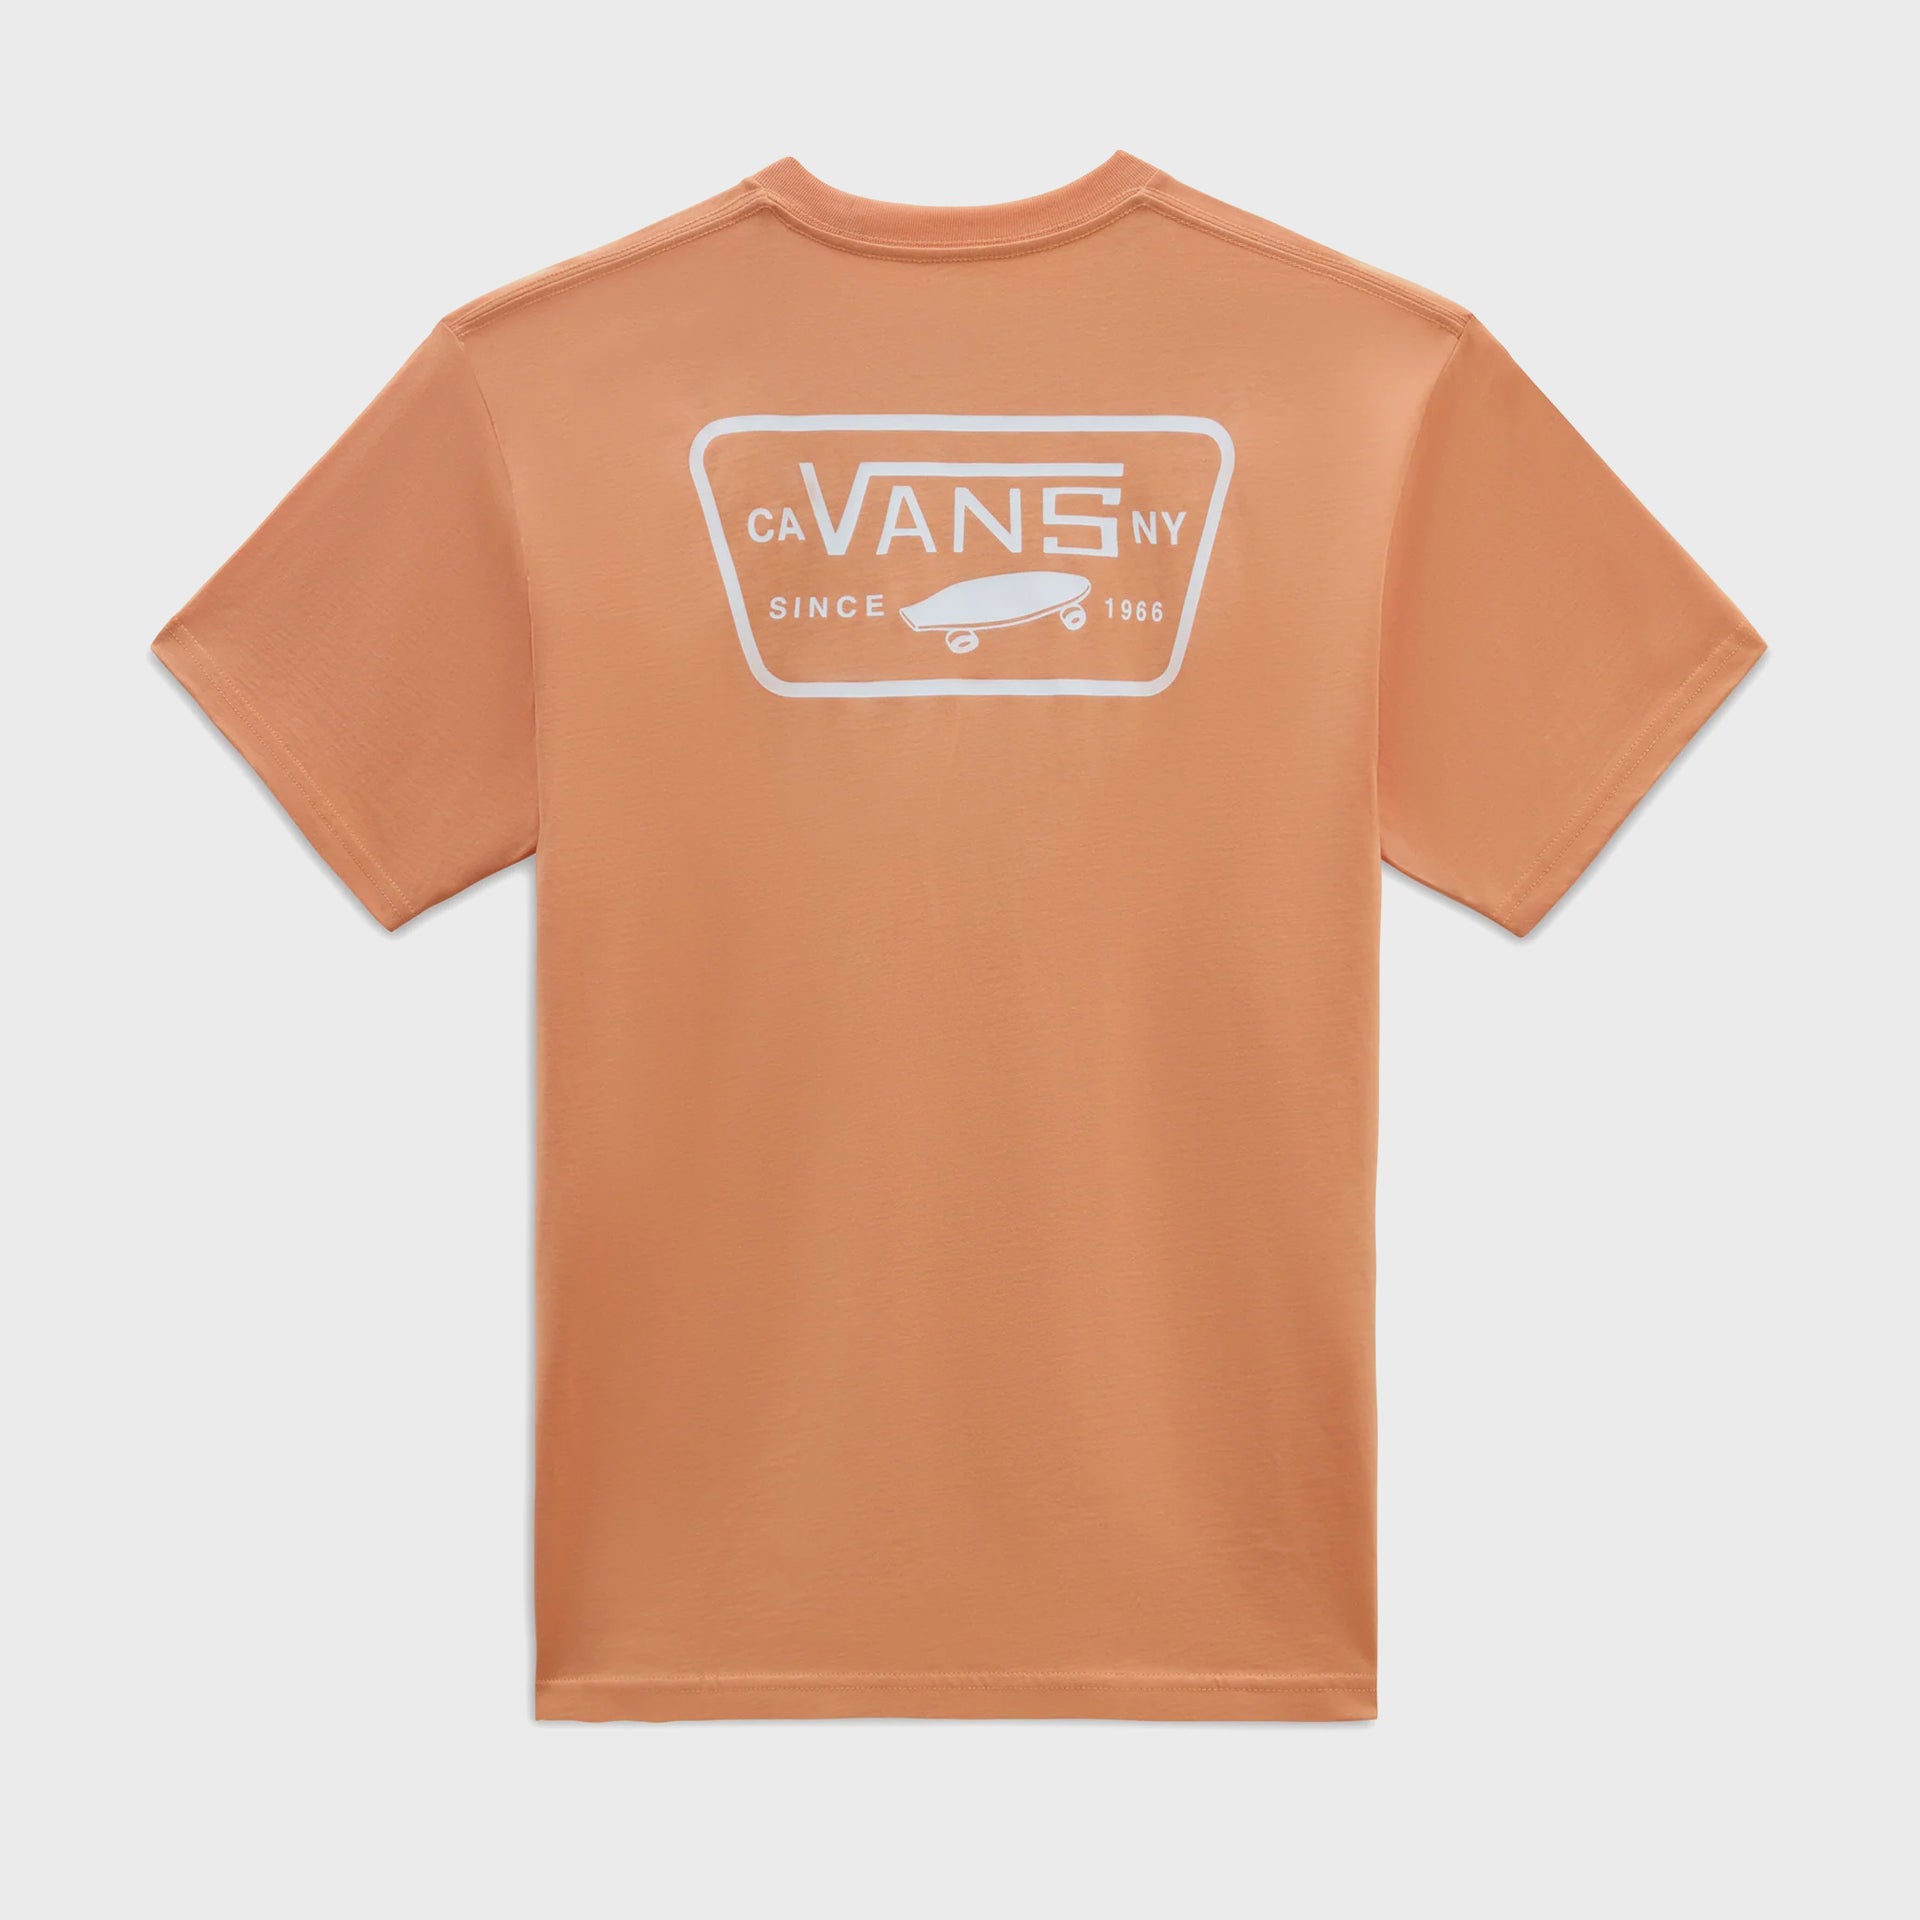 Vans Mens Full Patch Back T-Shirt - Copper Tan/White - ManGo Surfing